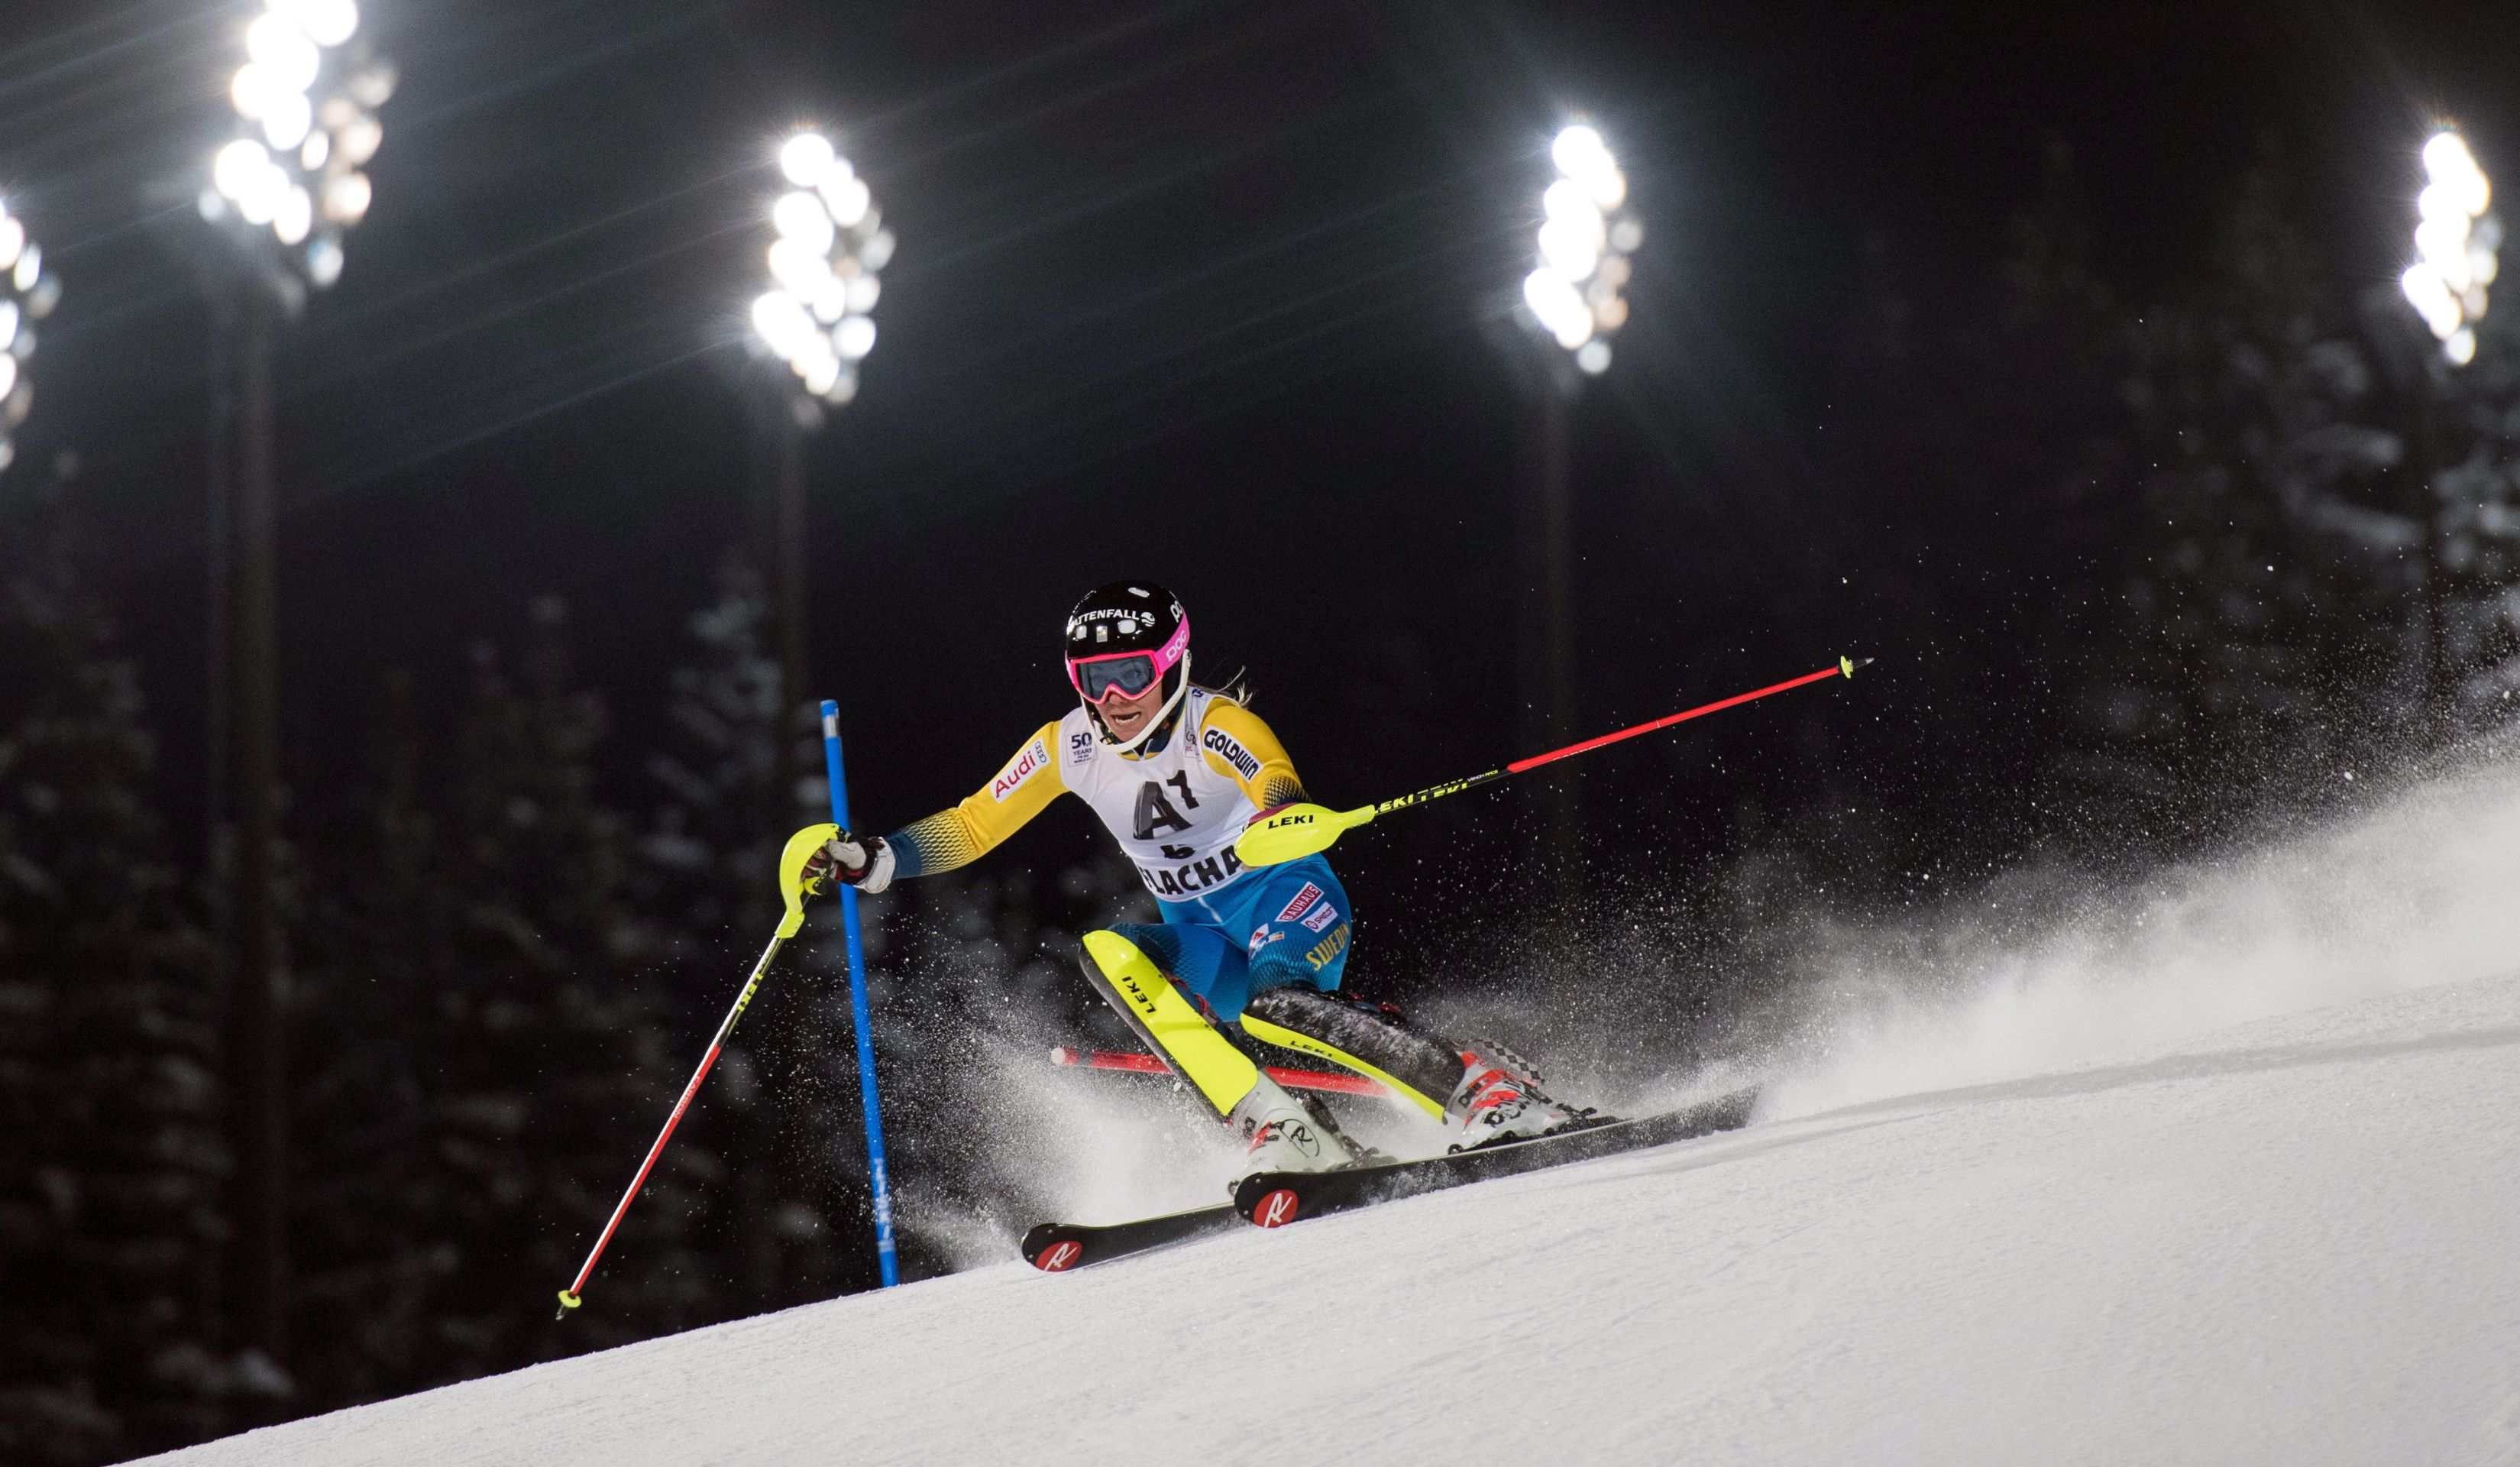 epa05709760 Frida Hansdotter of Sweden competes in the 1st run of the women's Alpine Skiing World Cup Slalom race in Flachau, Austria, 10 January 2017.  EPA/CHRISTIAN BRUNA